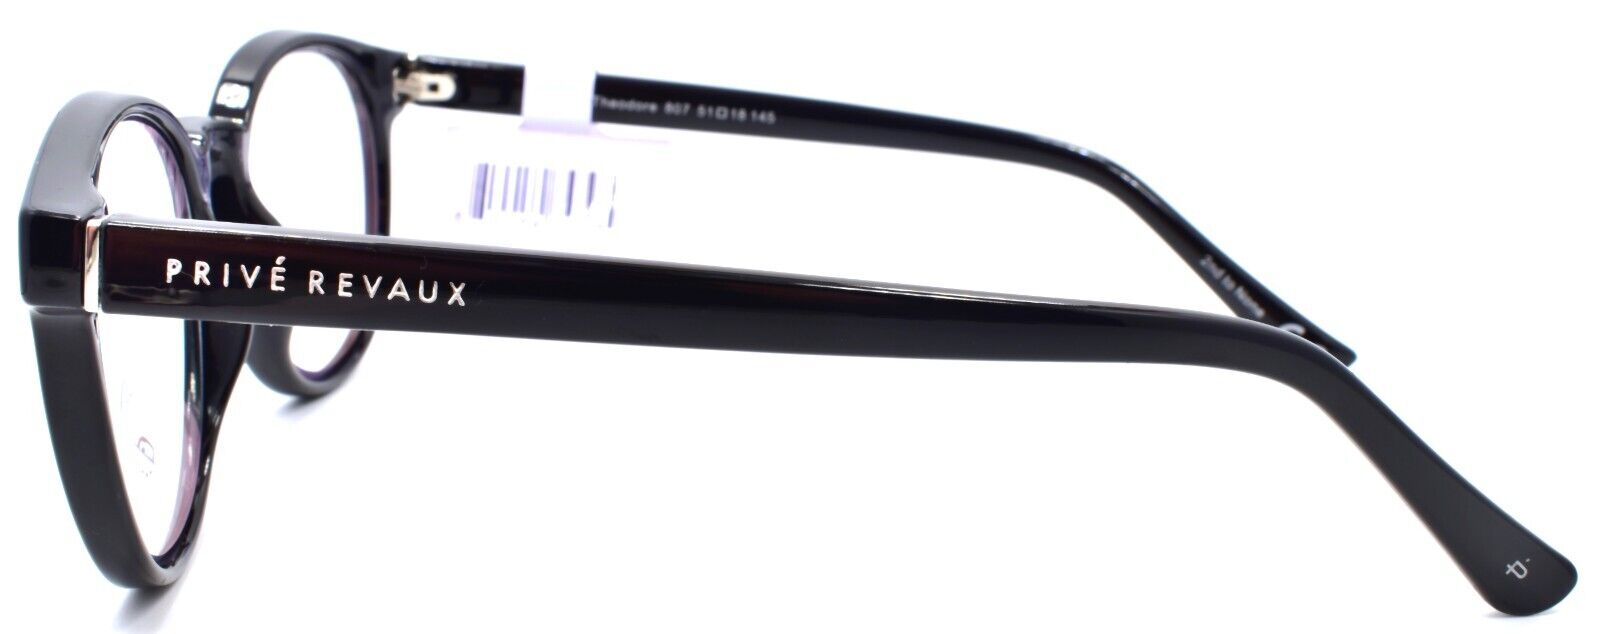 3-Prive Revaux Theodore 807 Eyeglasses Blue Light Blocking RX-ready Black-810054743989-IKSpecs